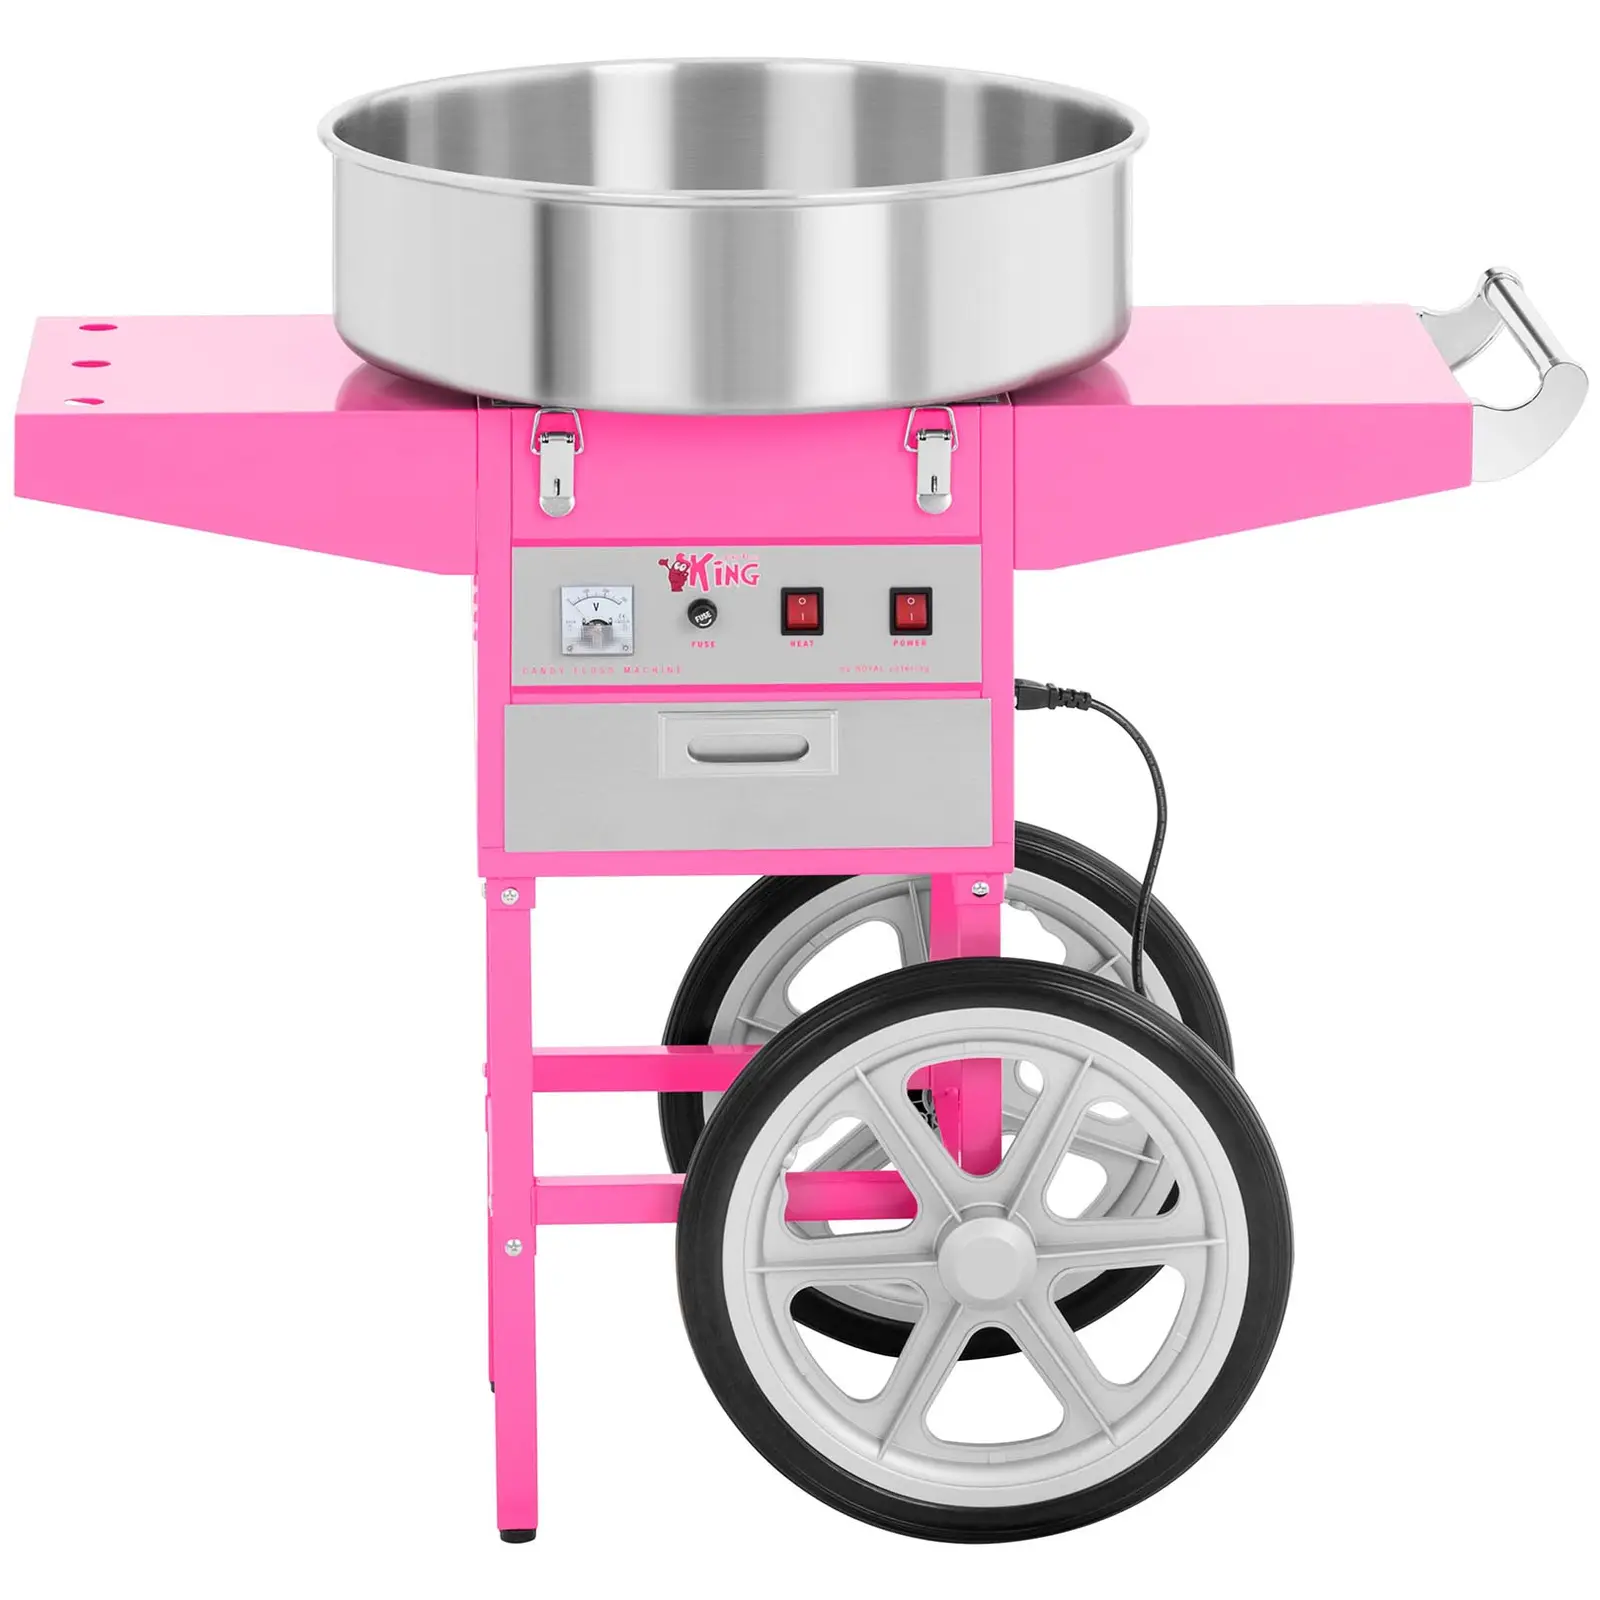 Candy Floss Machine Set with LED Cotton Candy Sticks - 52 cm - 1,200 W - Cart - Sneeze guard - 100 pcs.